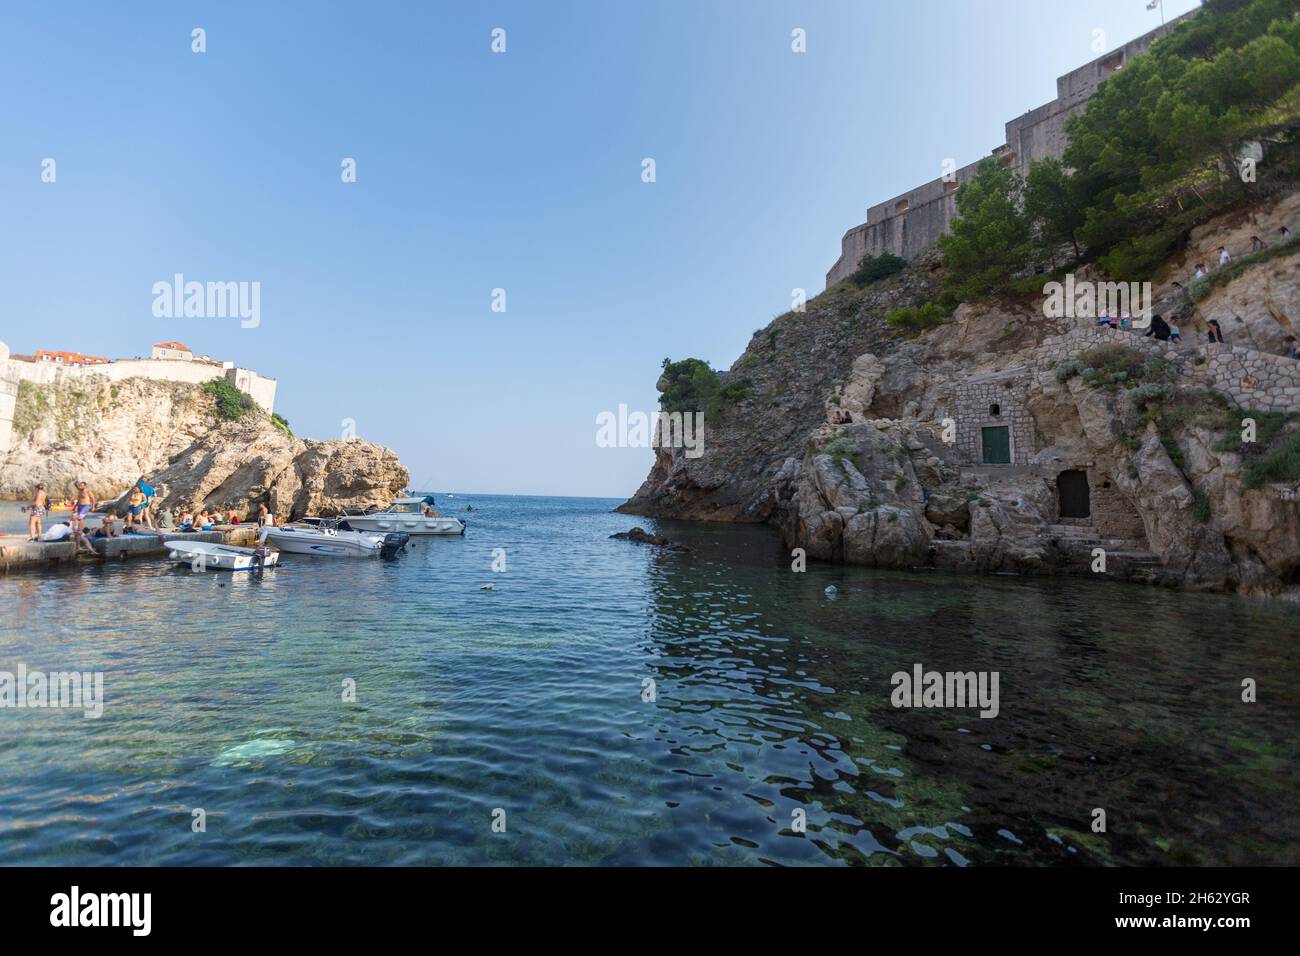 Wandern in Dubrovnik, kroatien - berühmter Drehort für Thronspiel. Dort heißt es: Königslandung Stockfoto